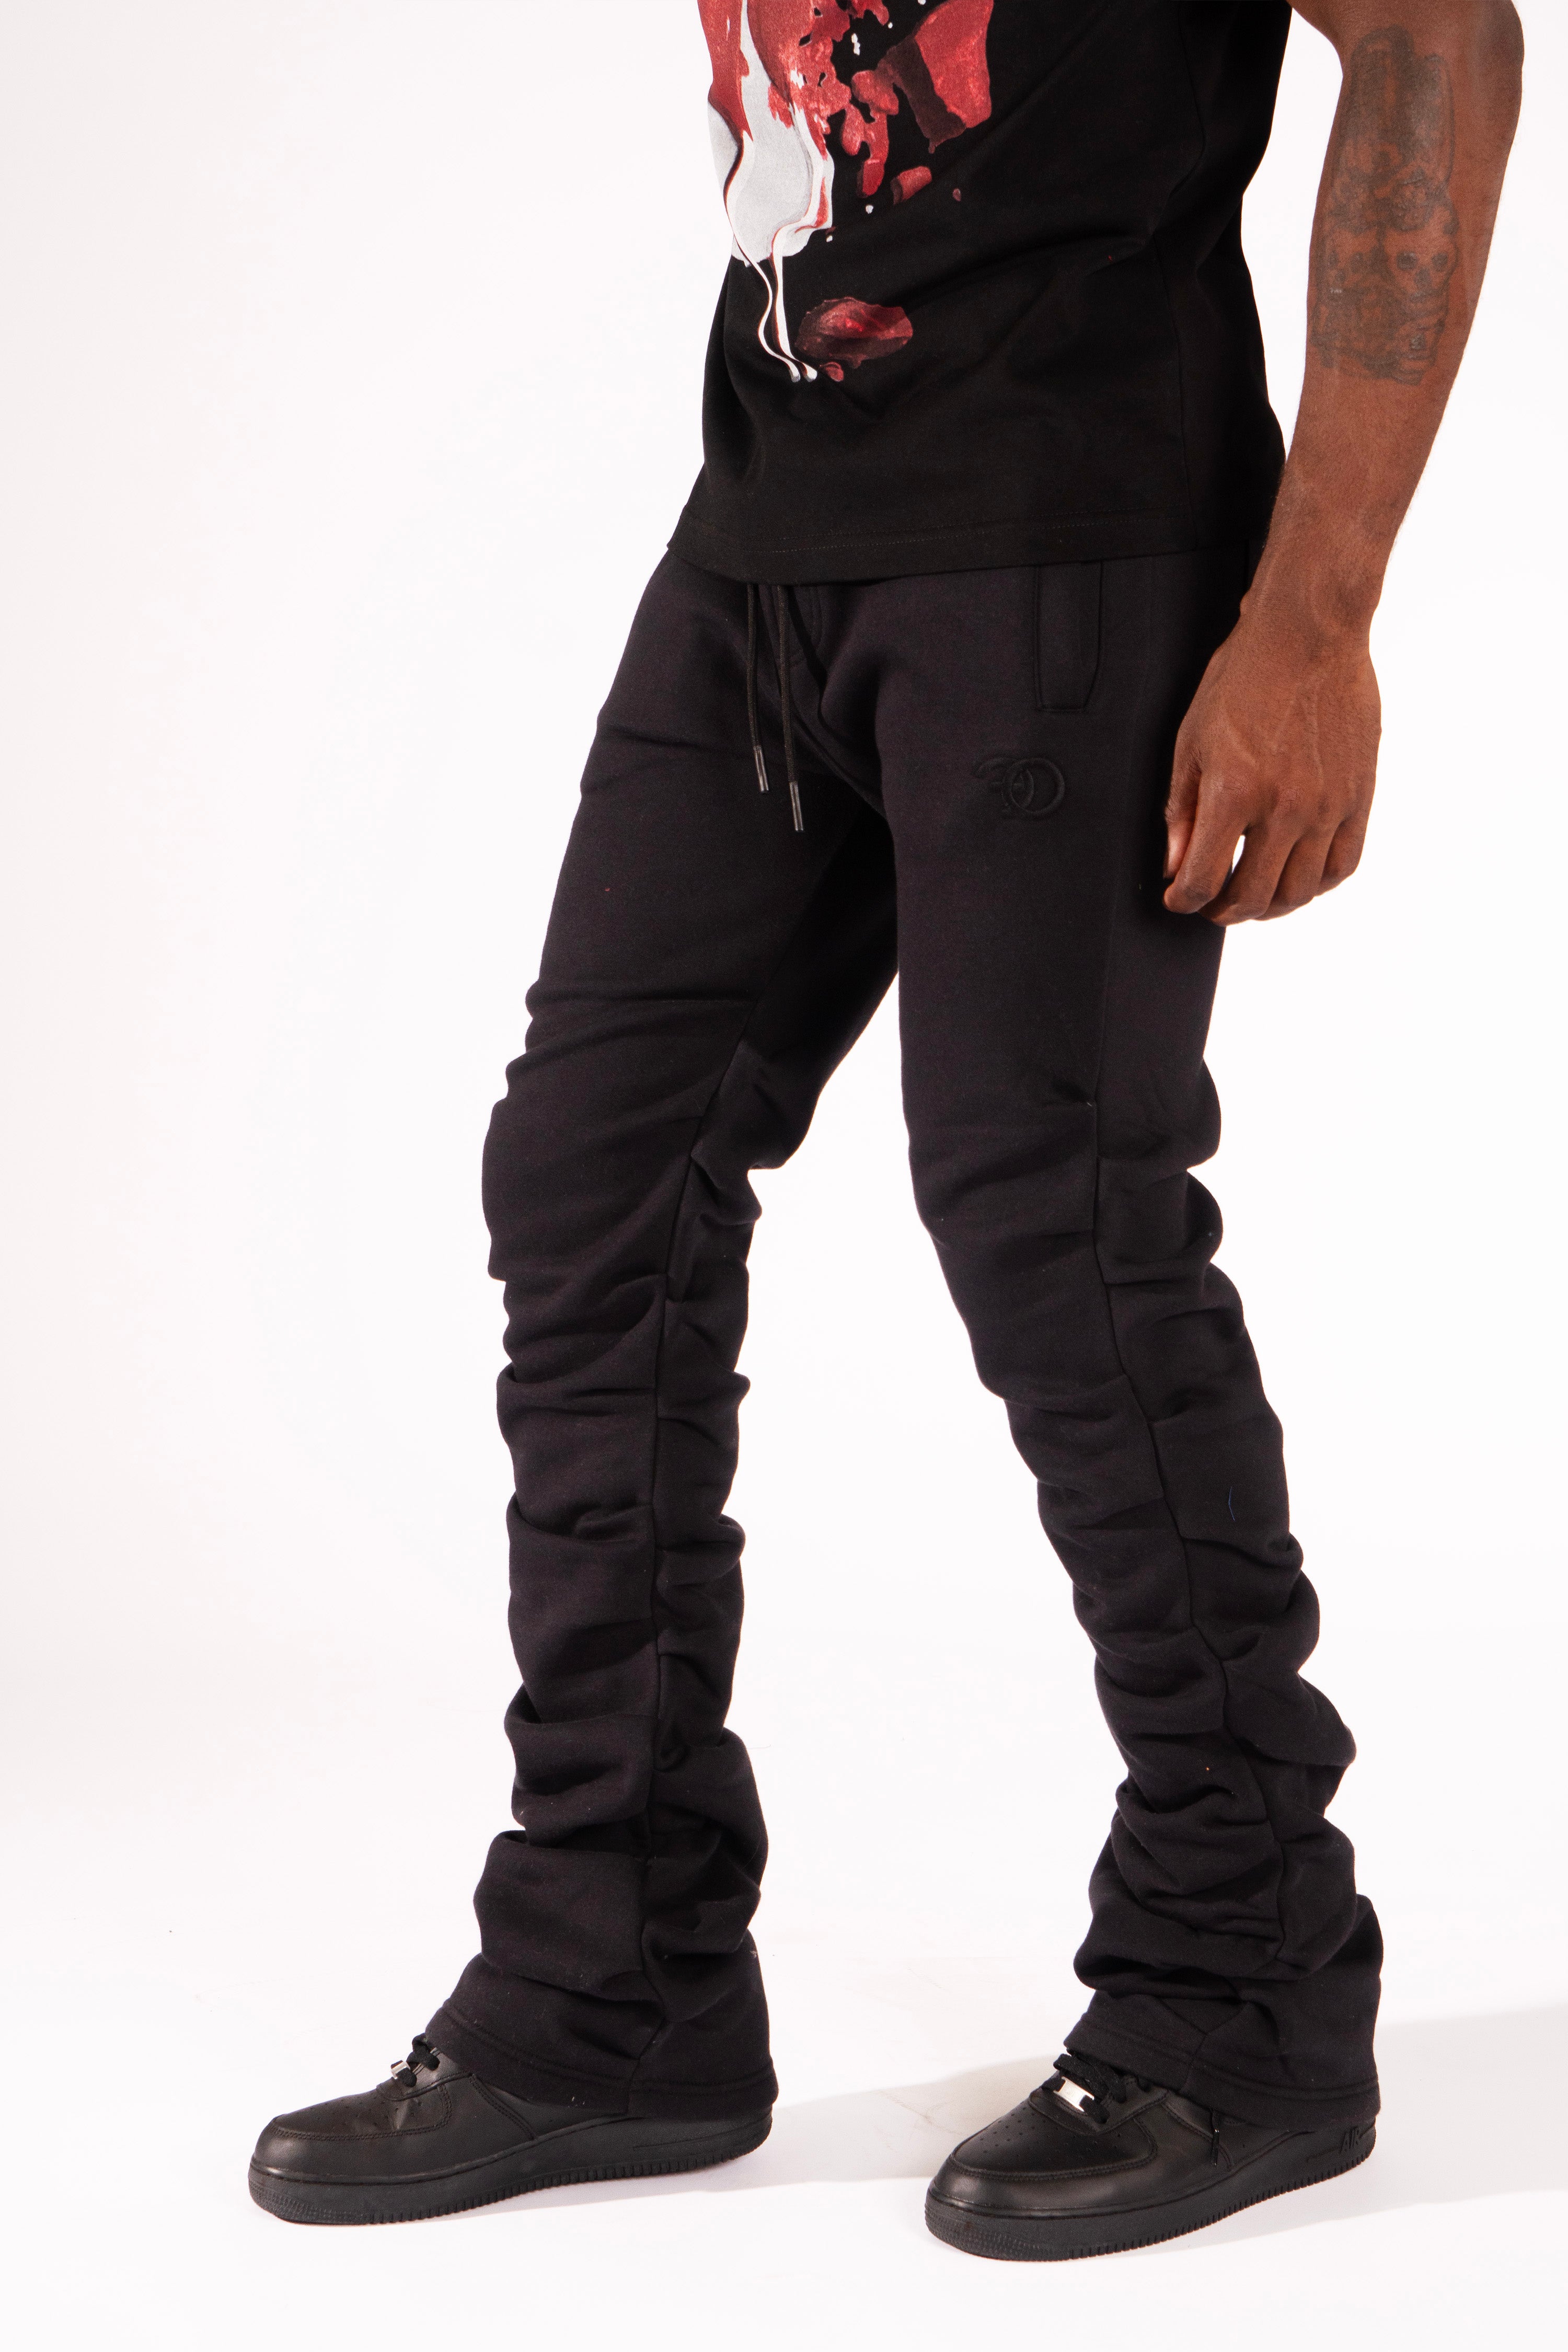 F6220 Malik Stacked Sweatpants - Black